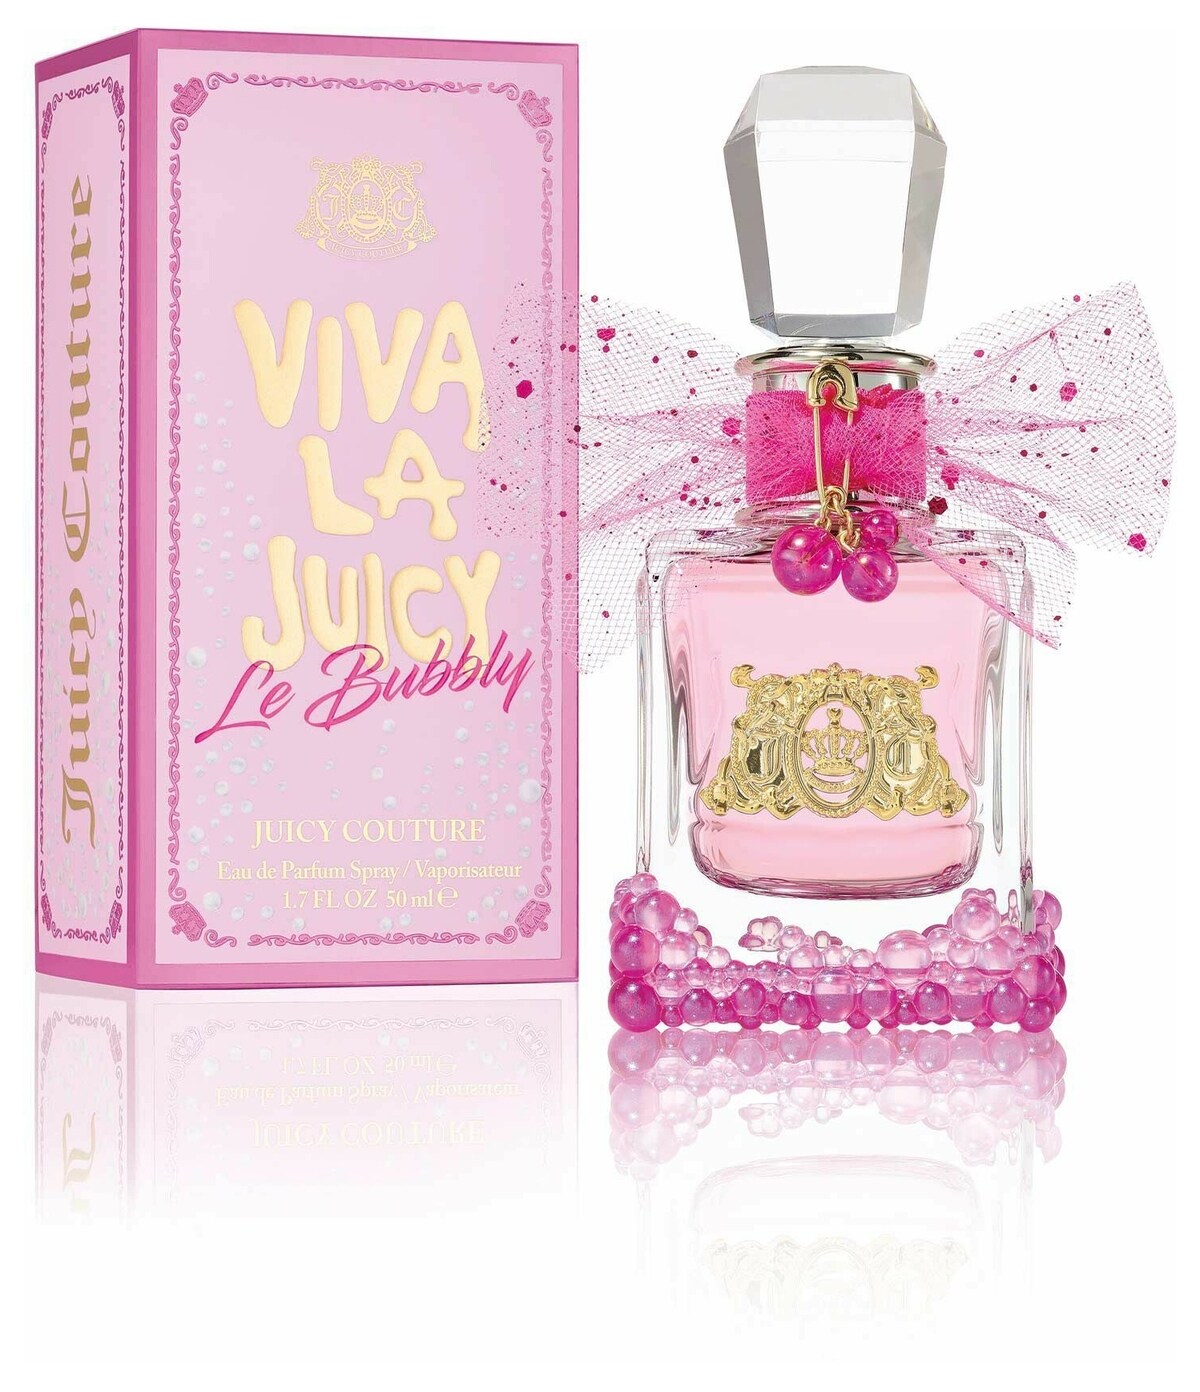 Viva La Juicy Le Bubbly by Juicy Couture » Reviews & Perfume Facts